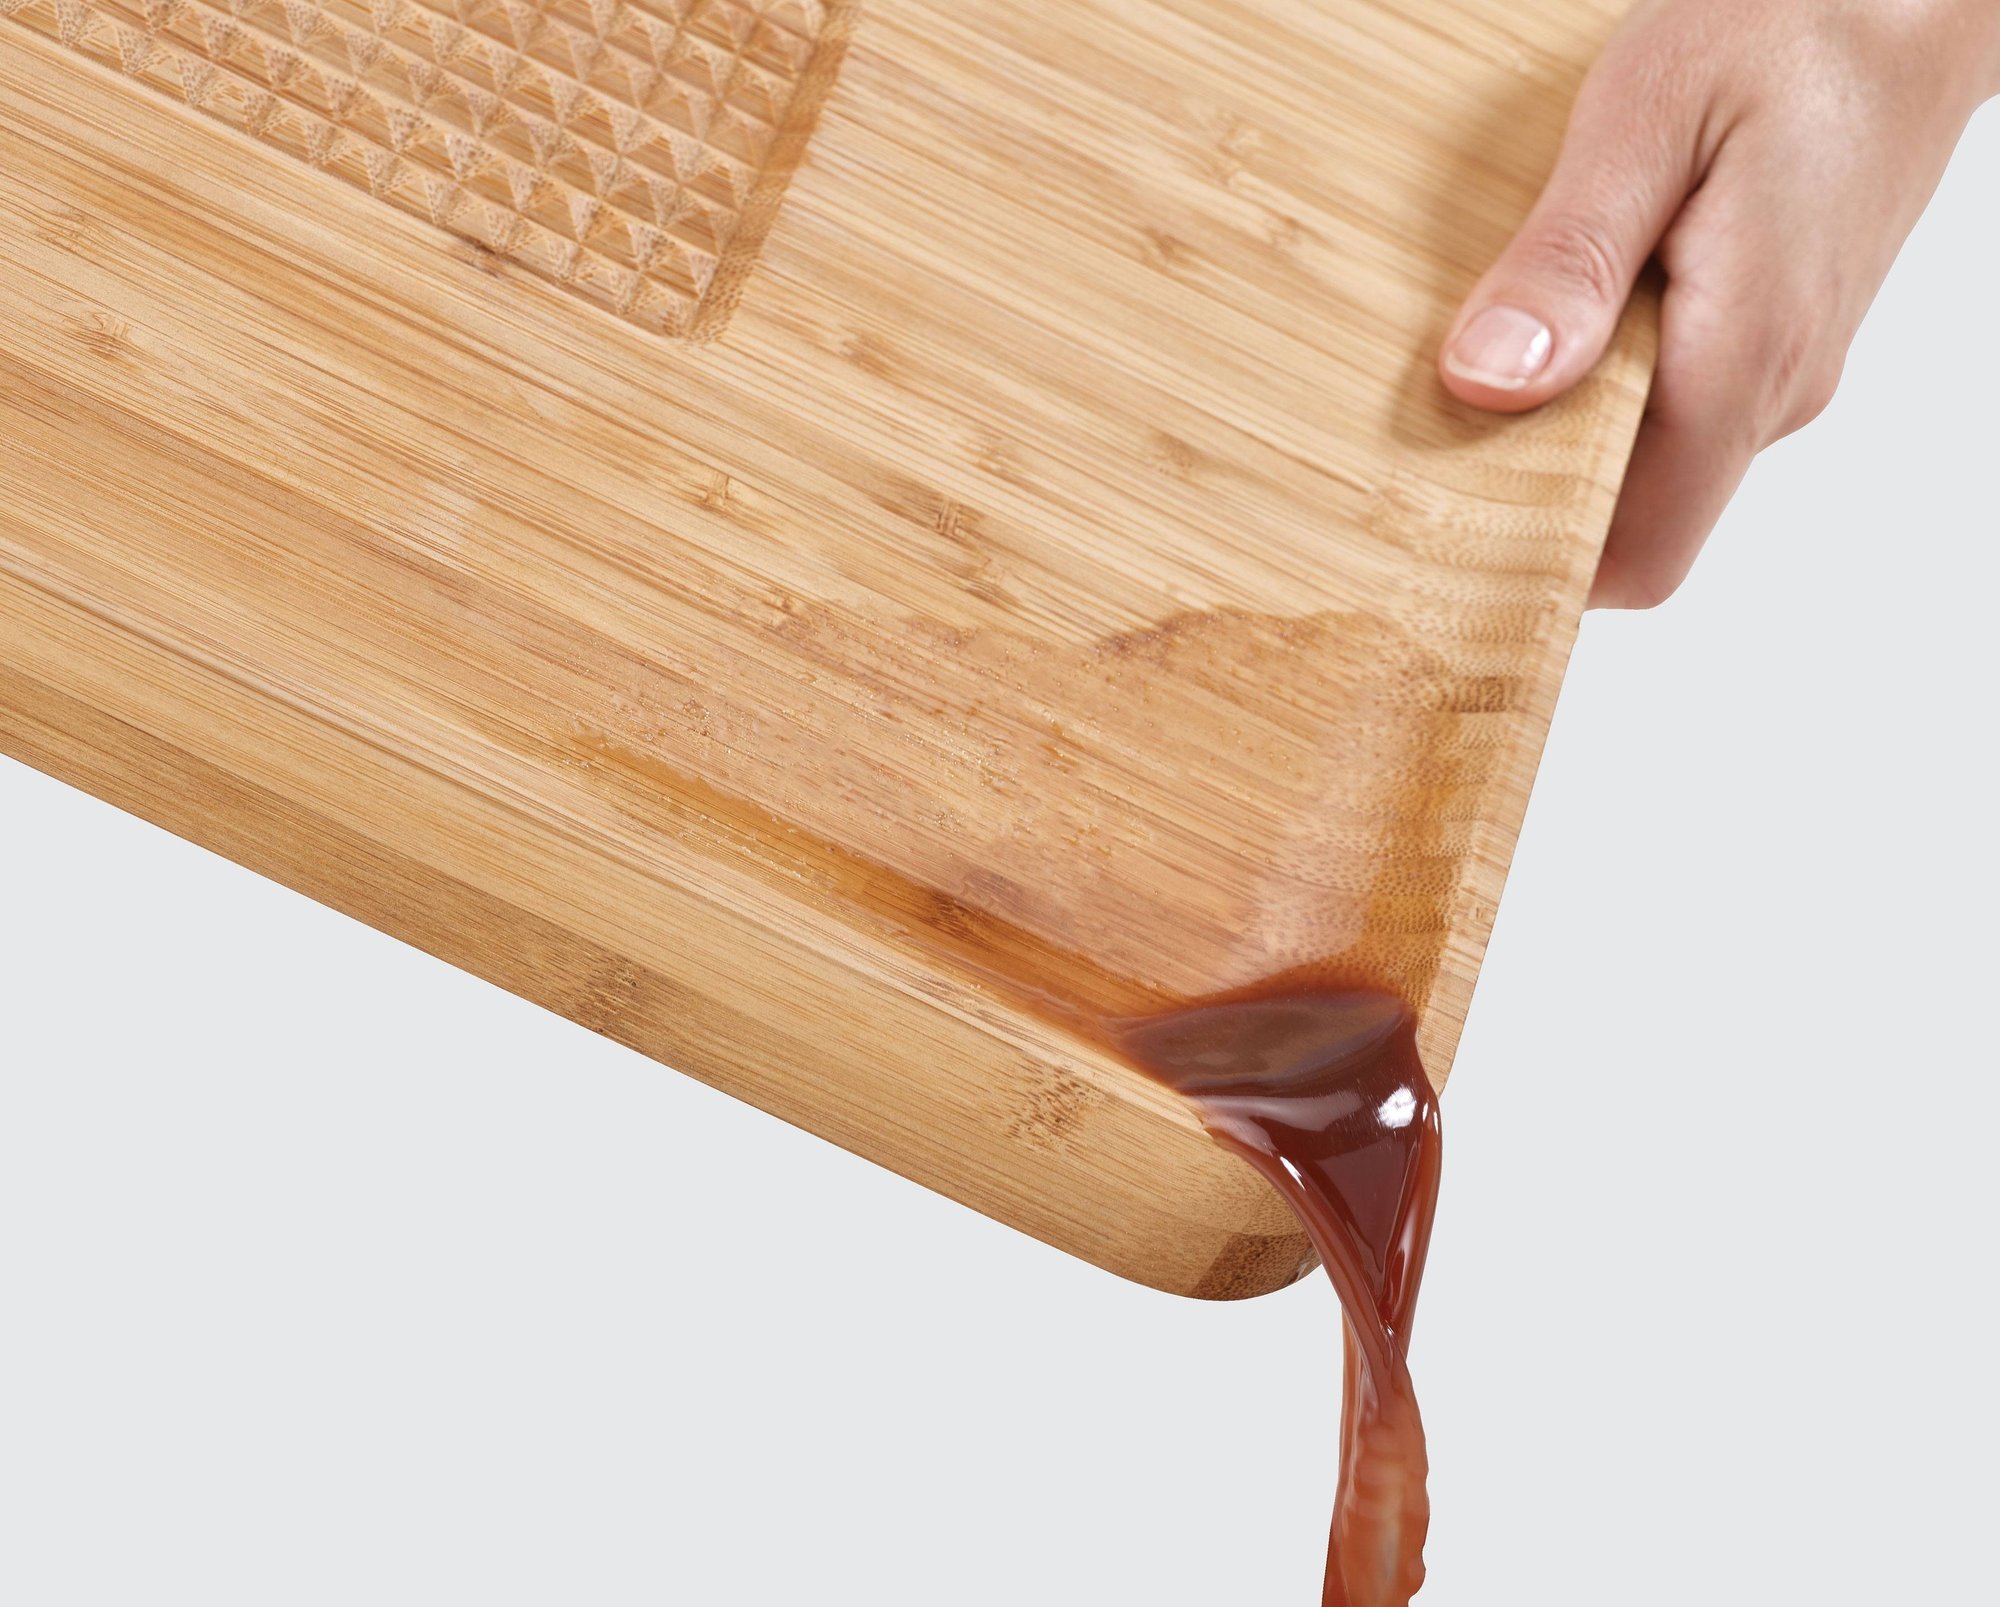 Joseph Joseph Cut&Carve Bamboo Chopping Board Product Image 1